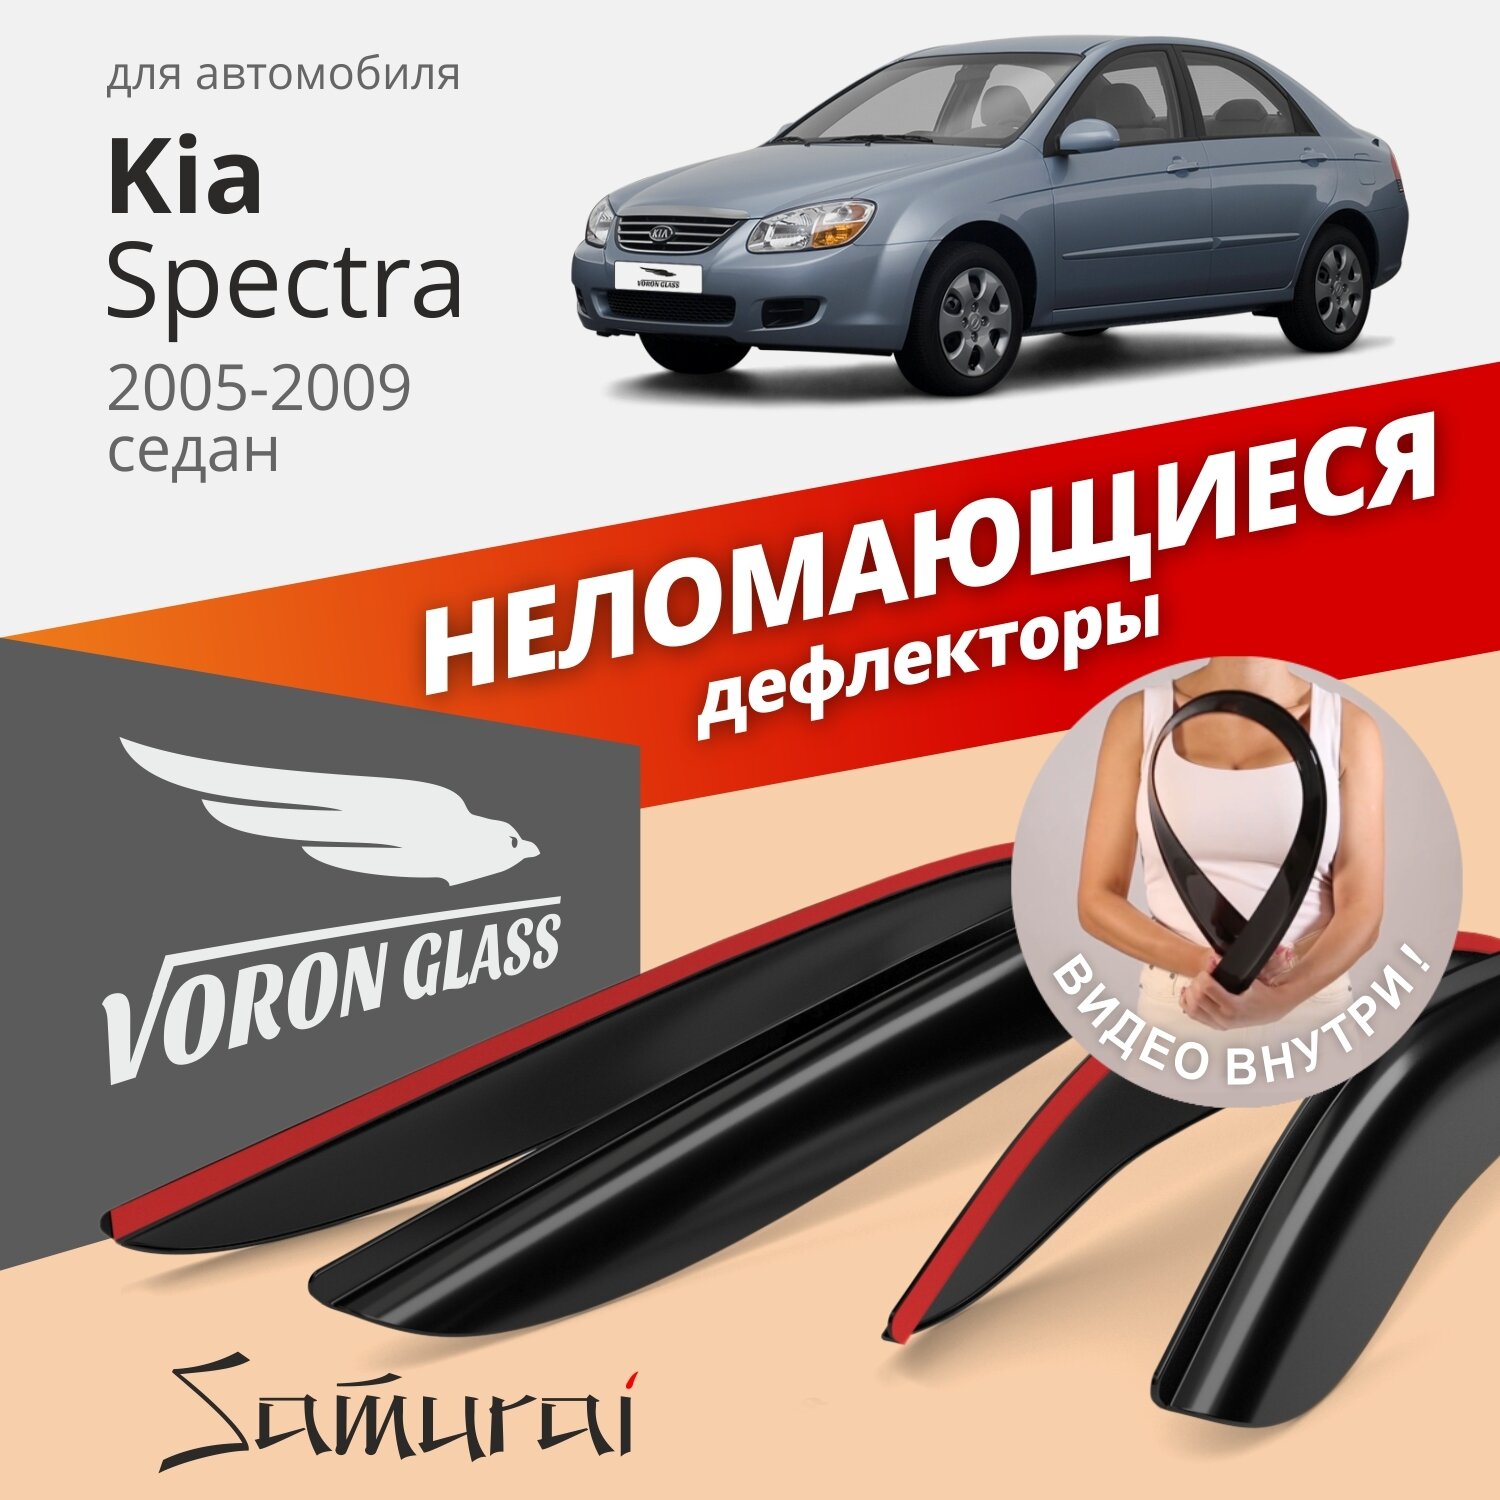 Дефлектор окон Voron Glass DEF00233 для Kia Spectra